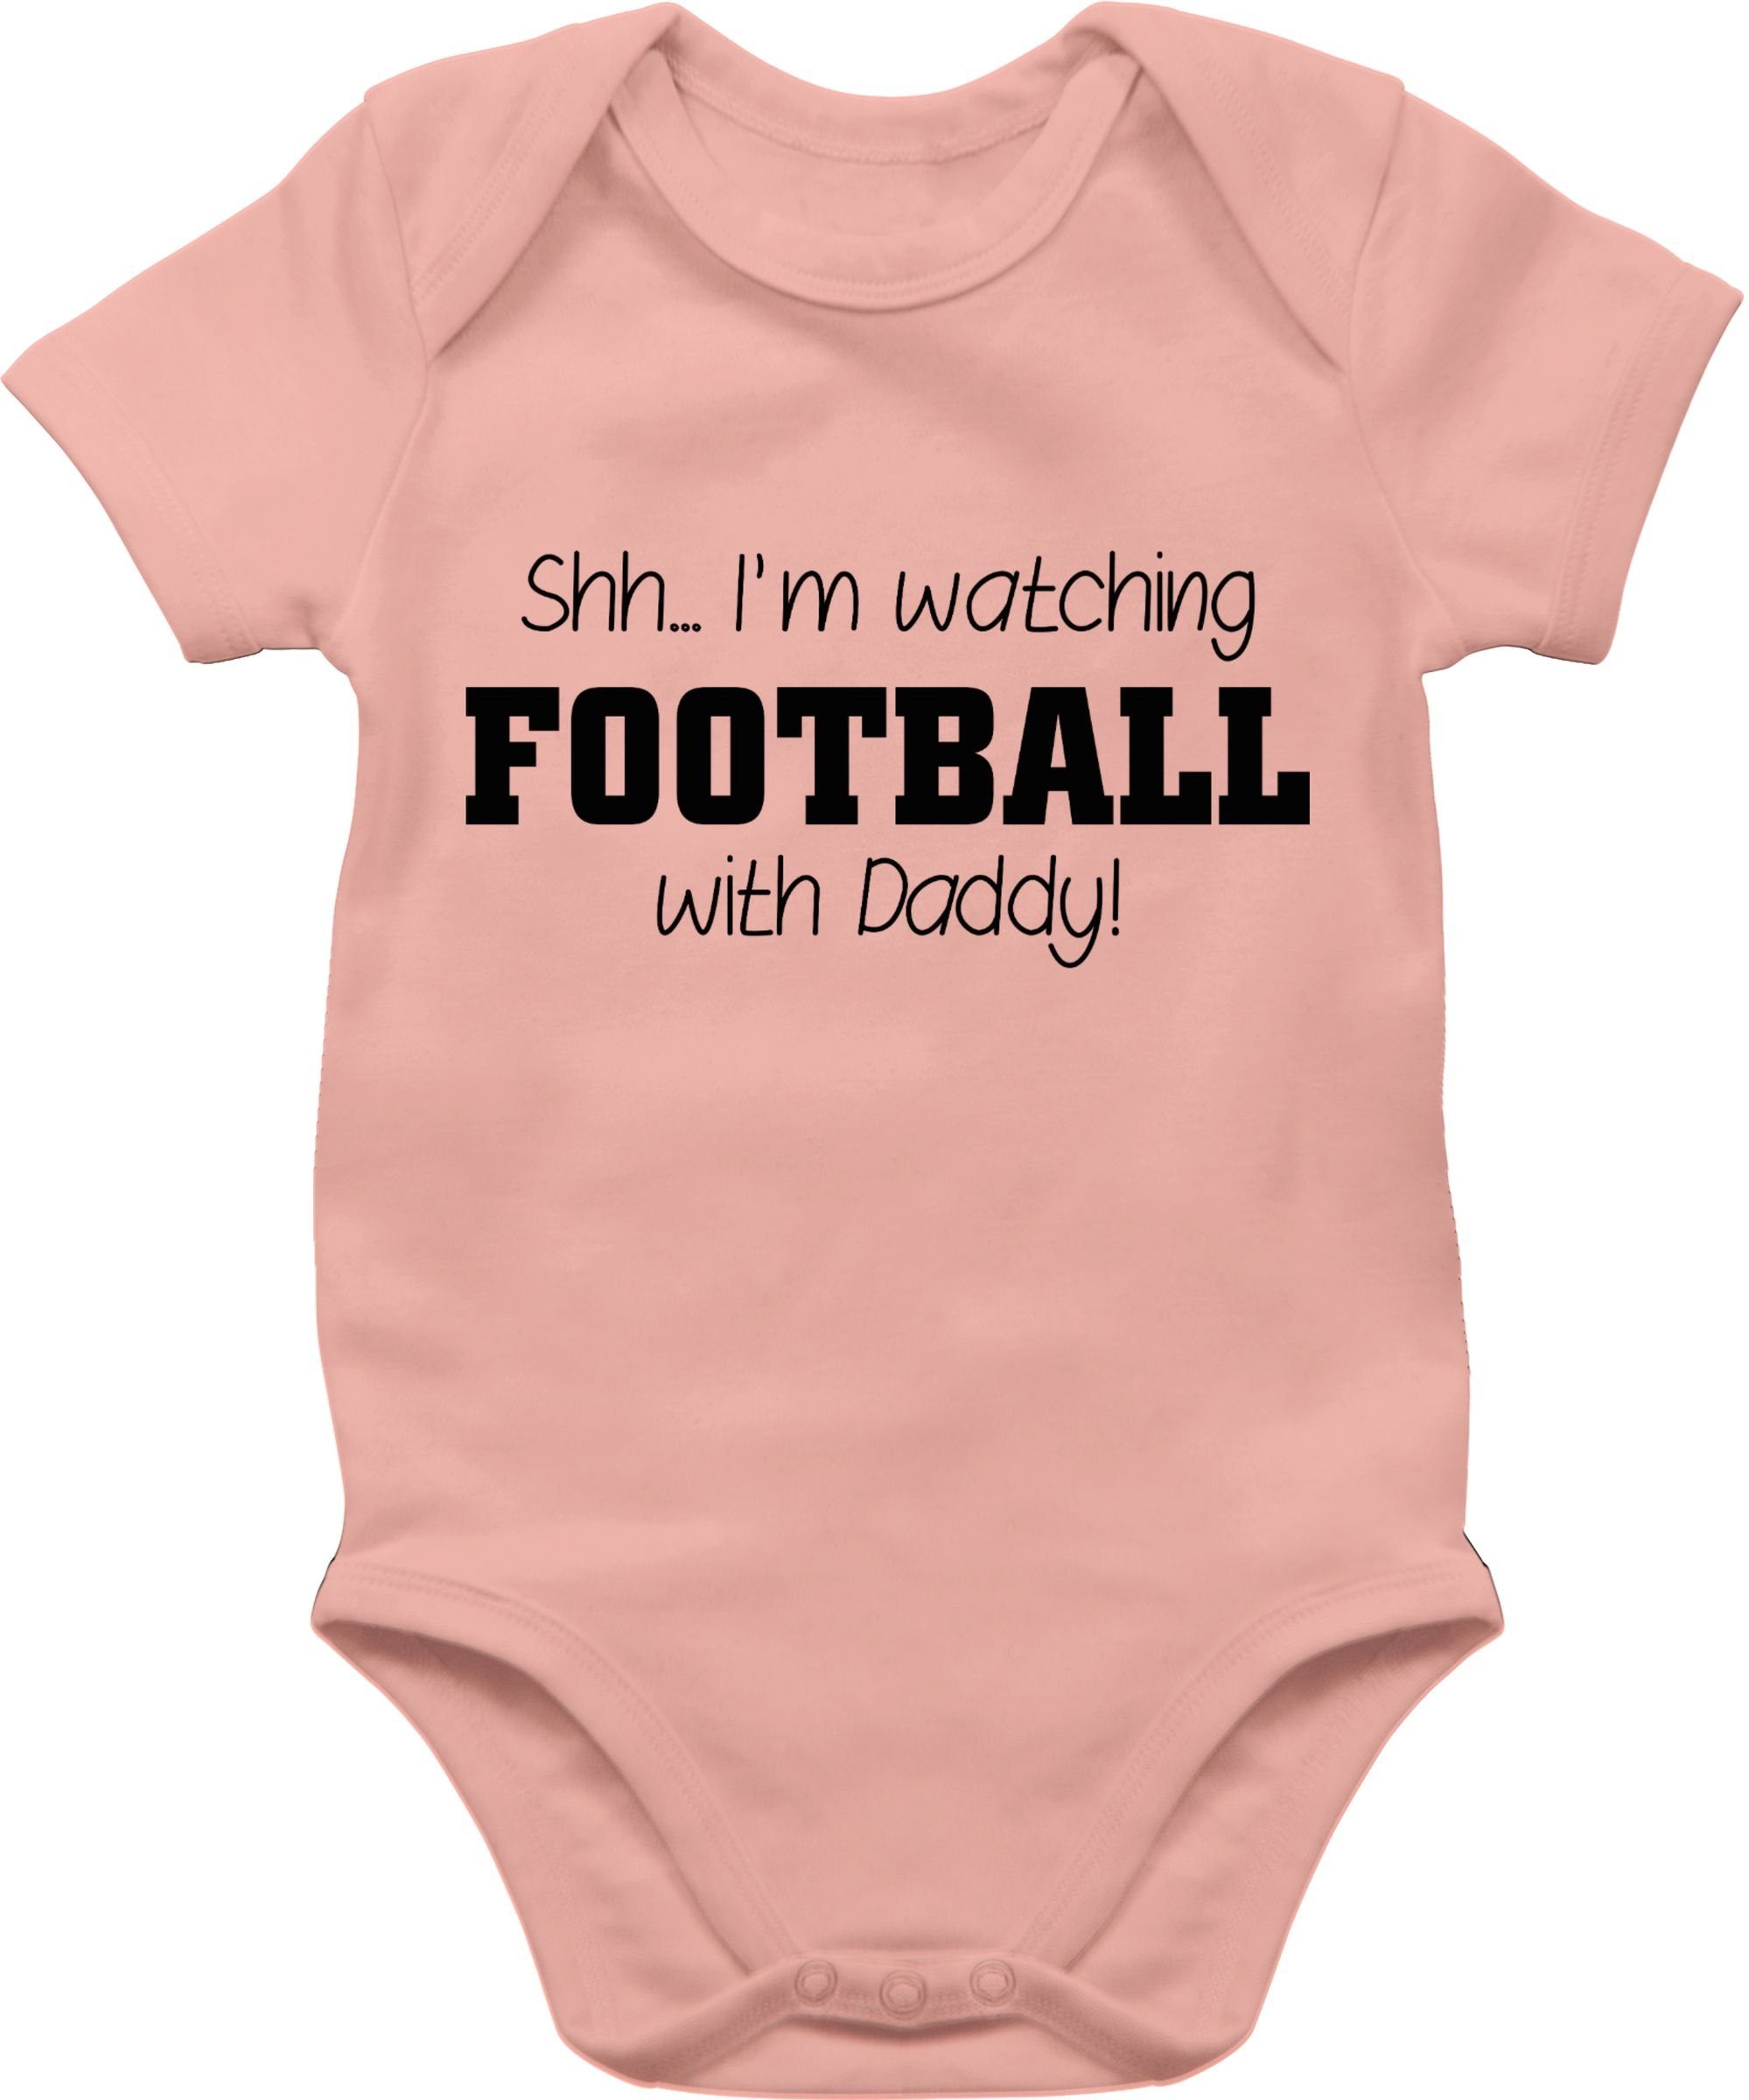 schwarz Baby Sport with Shirtbody 3 Babyrosa Daddy! watching - & Bewegung football Shh...I'm Shirtracer